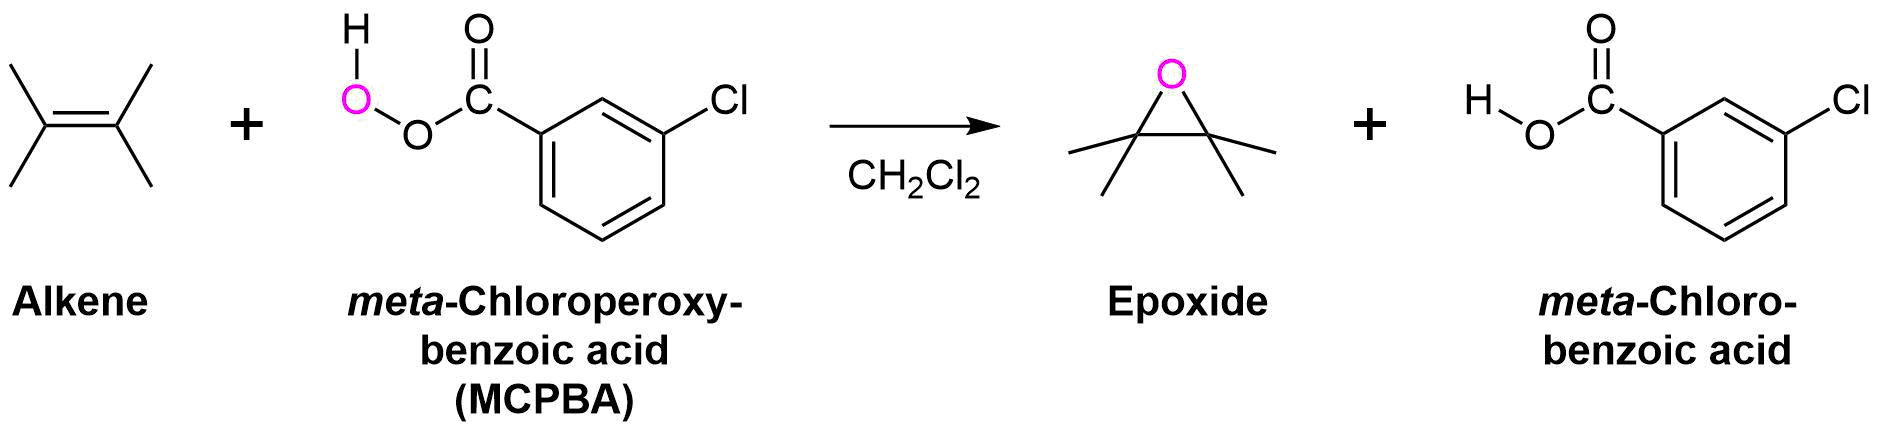 Epoxide General Reaction.png